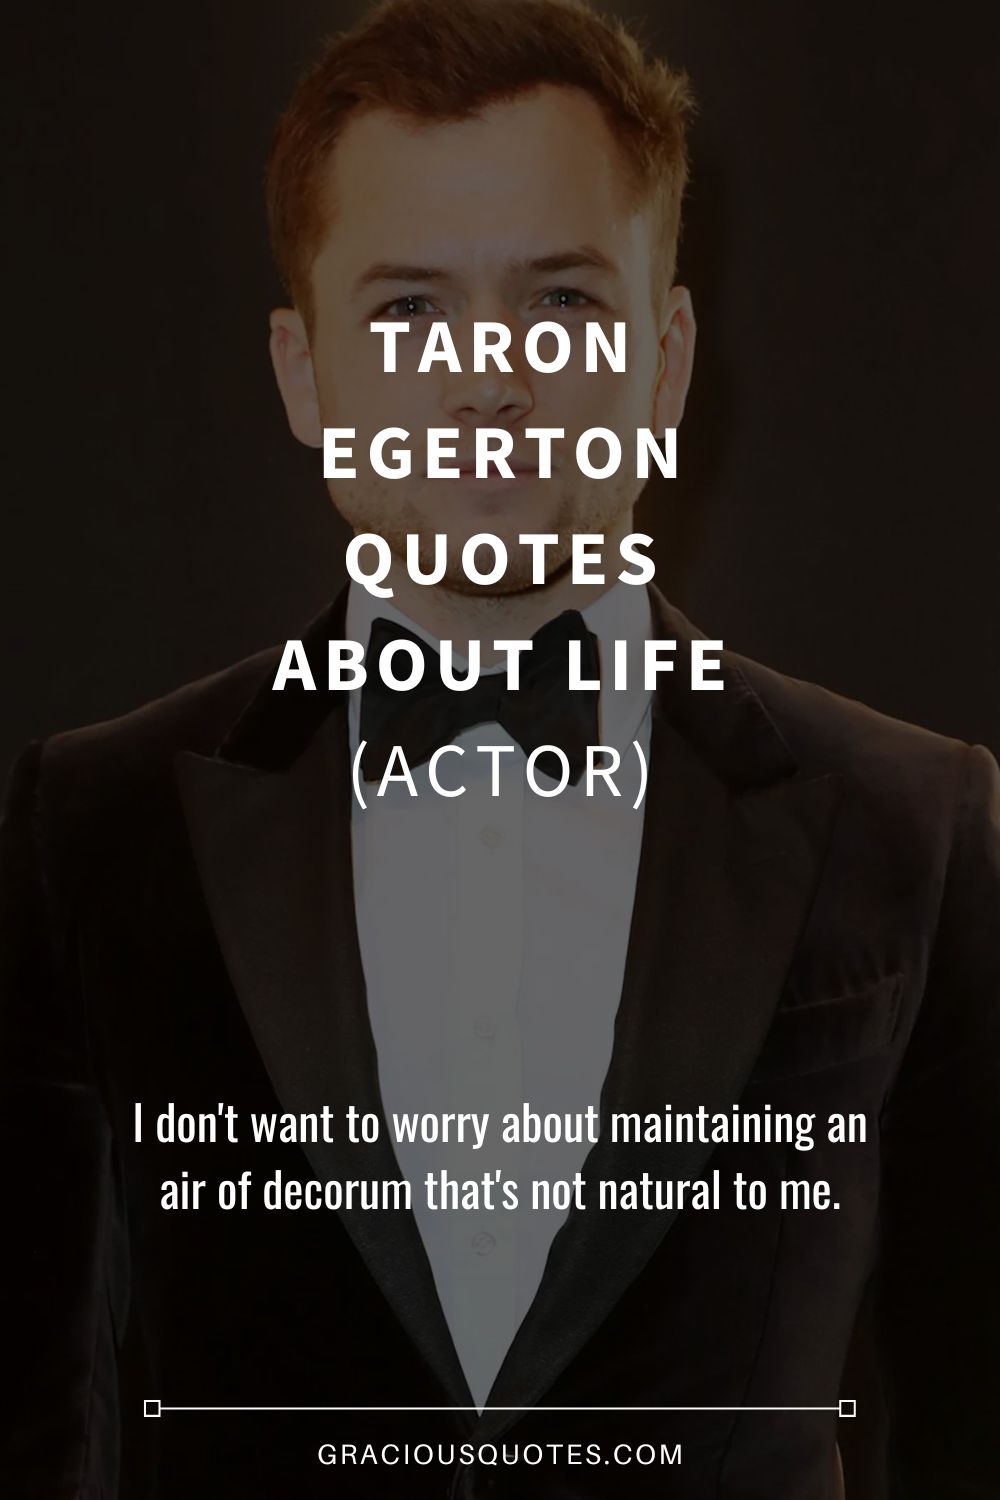 Taron Egerton Quotes About Life (ACTOR) - Gracious Quotes